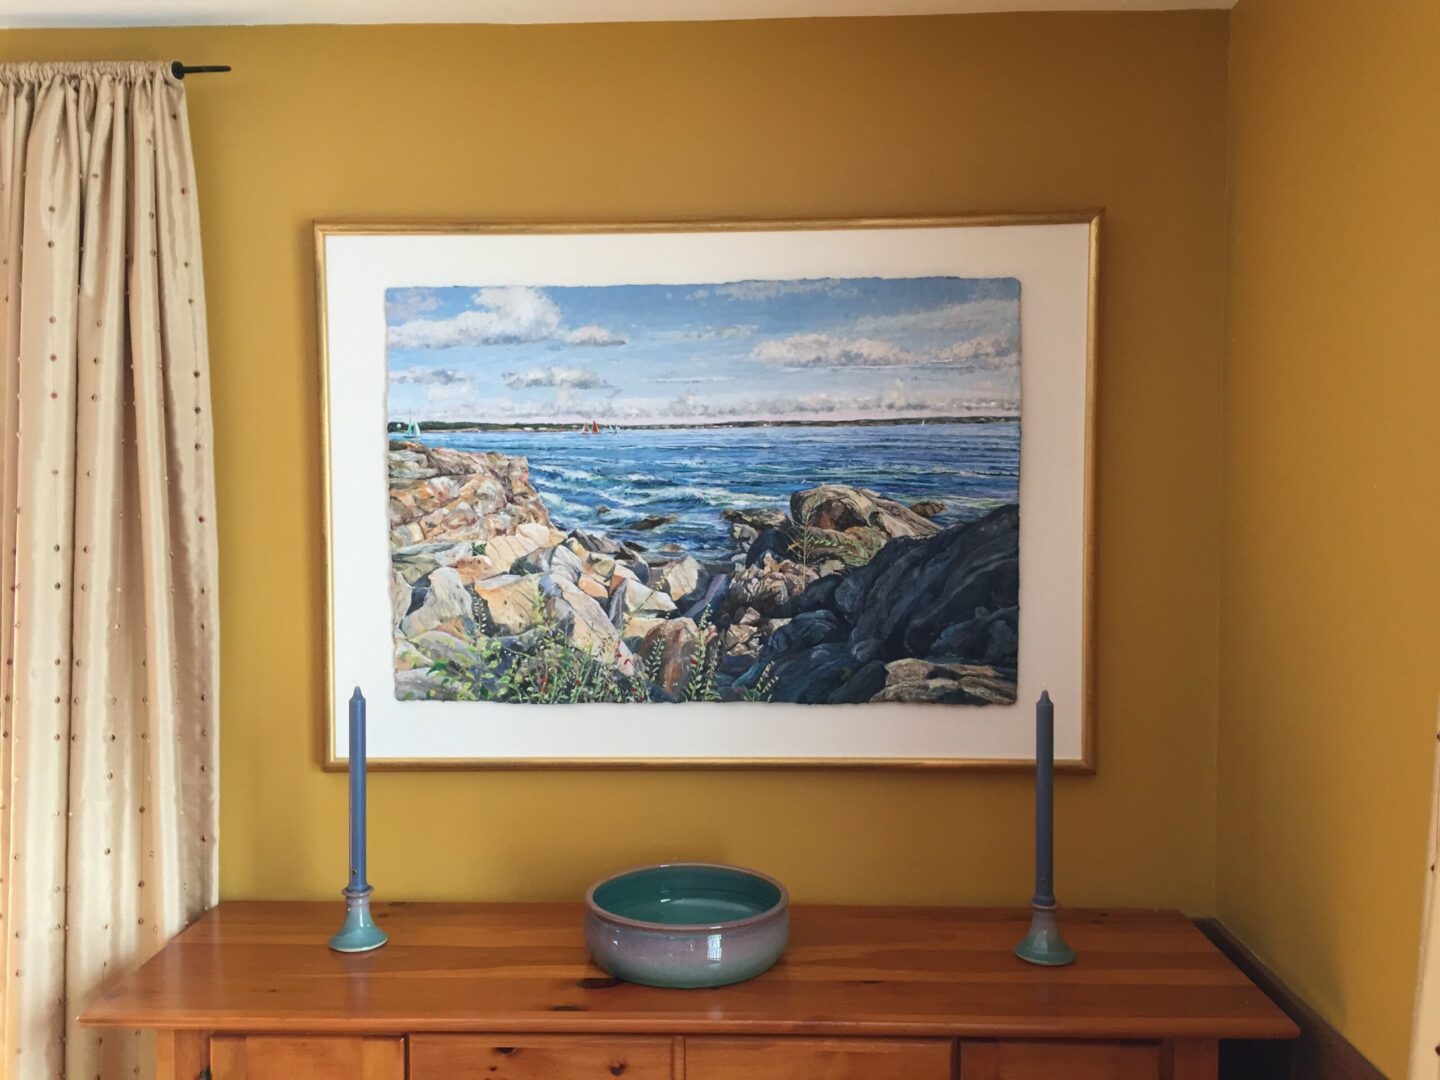 Marblehead Harbor, 36 x 24 inches, custom framed.